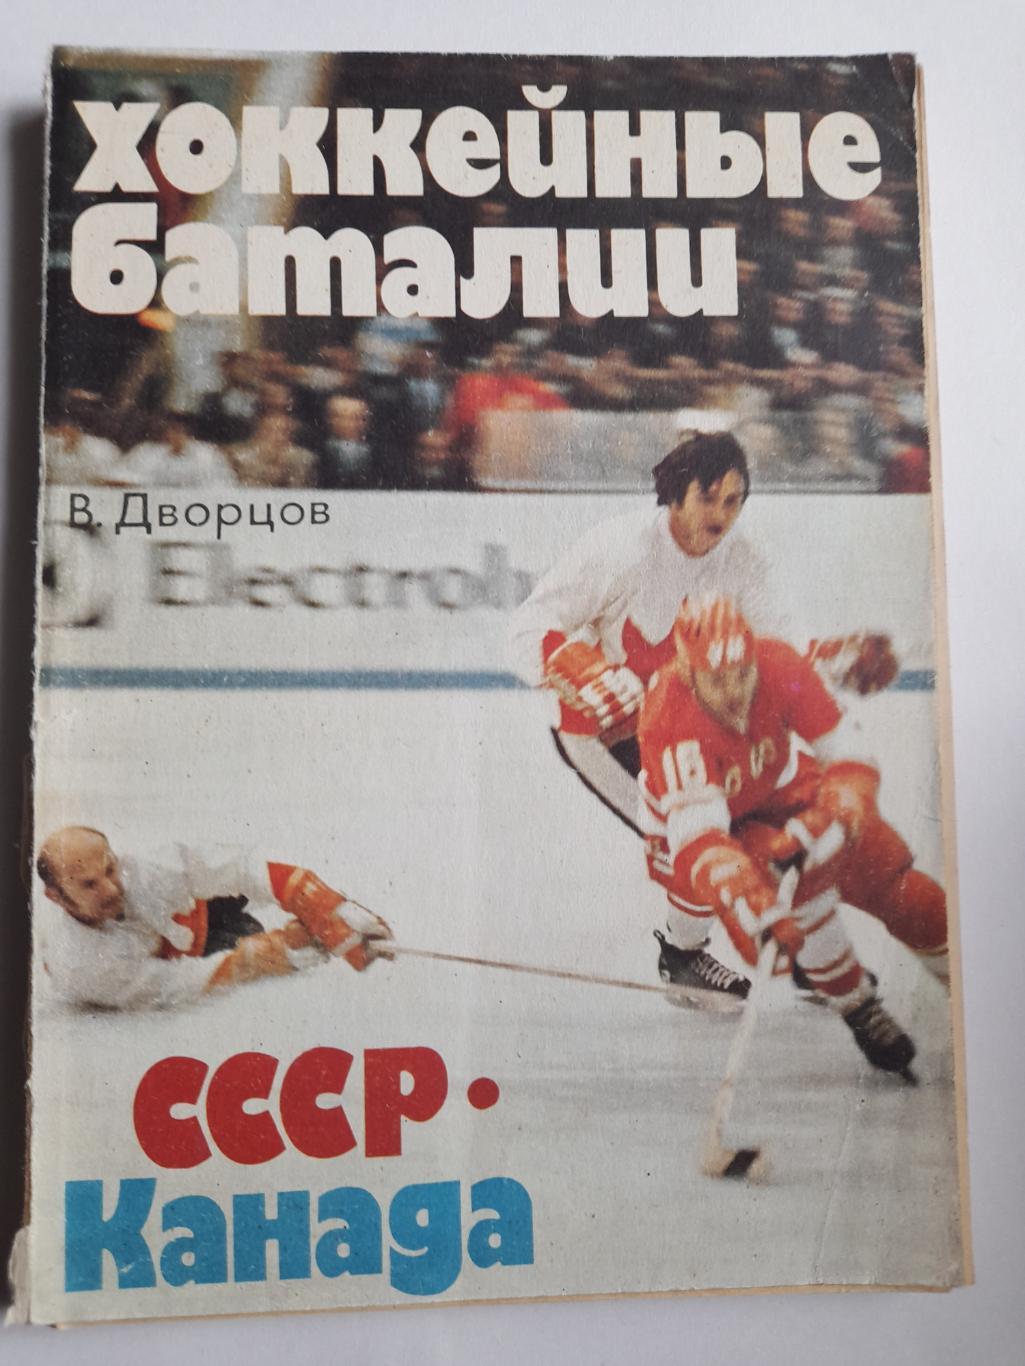 5 Хоккейные баталии СССР Канада